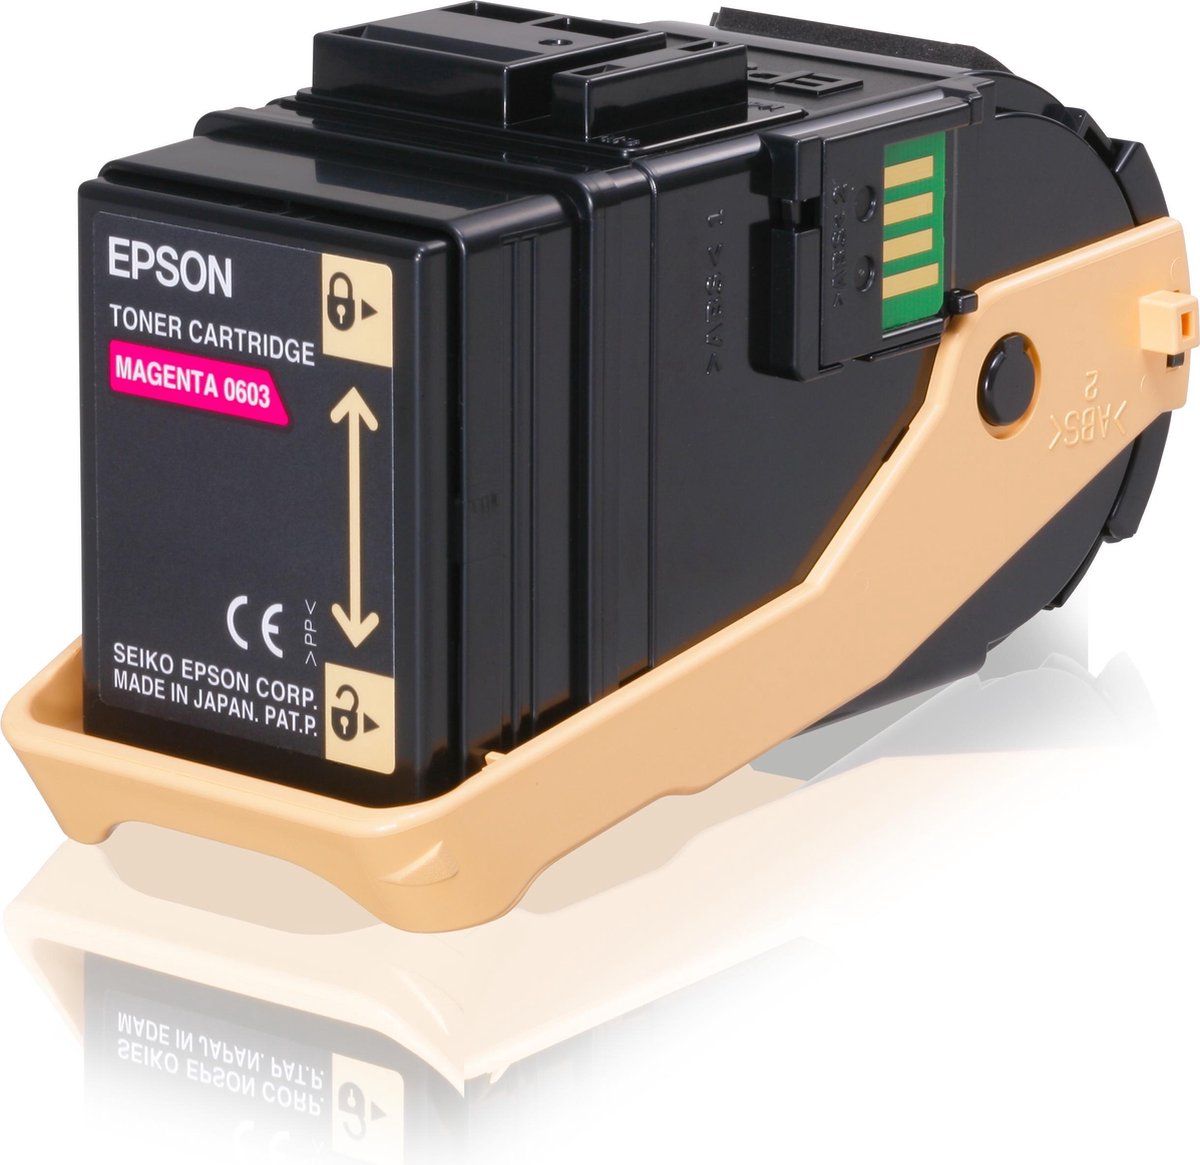 EPSON AL-C9300N tonercartridge magenta standard capacity 7.500 pagina's 1-pack